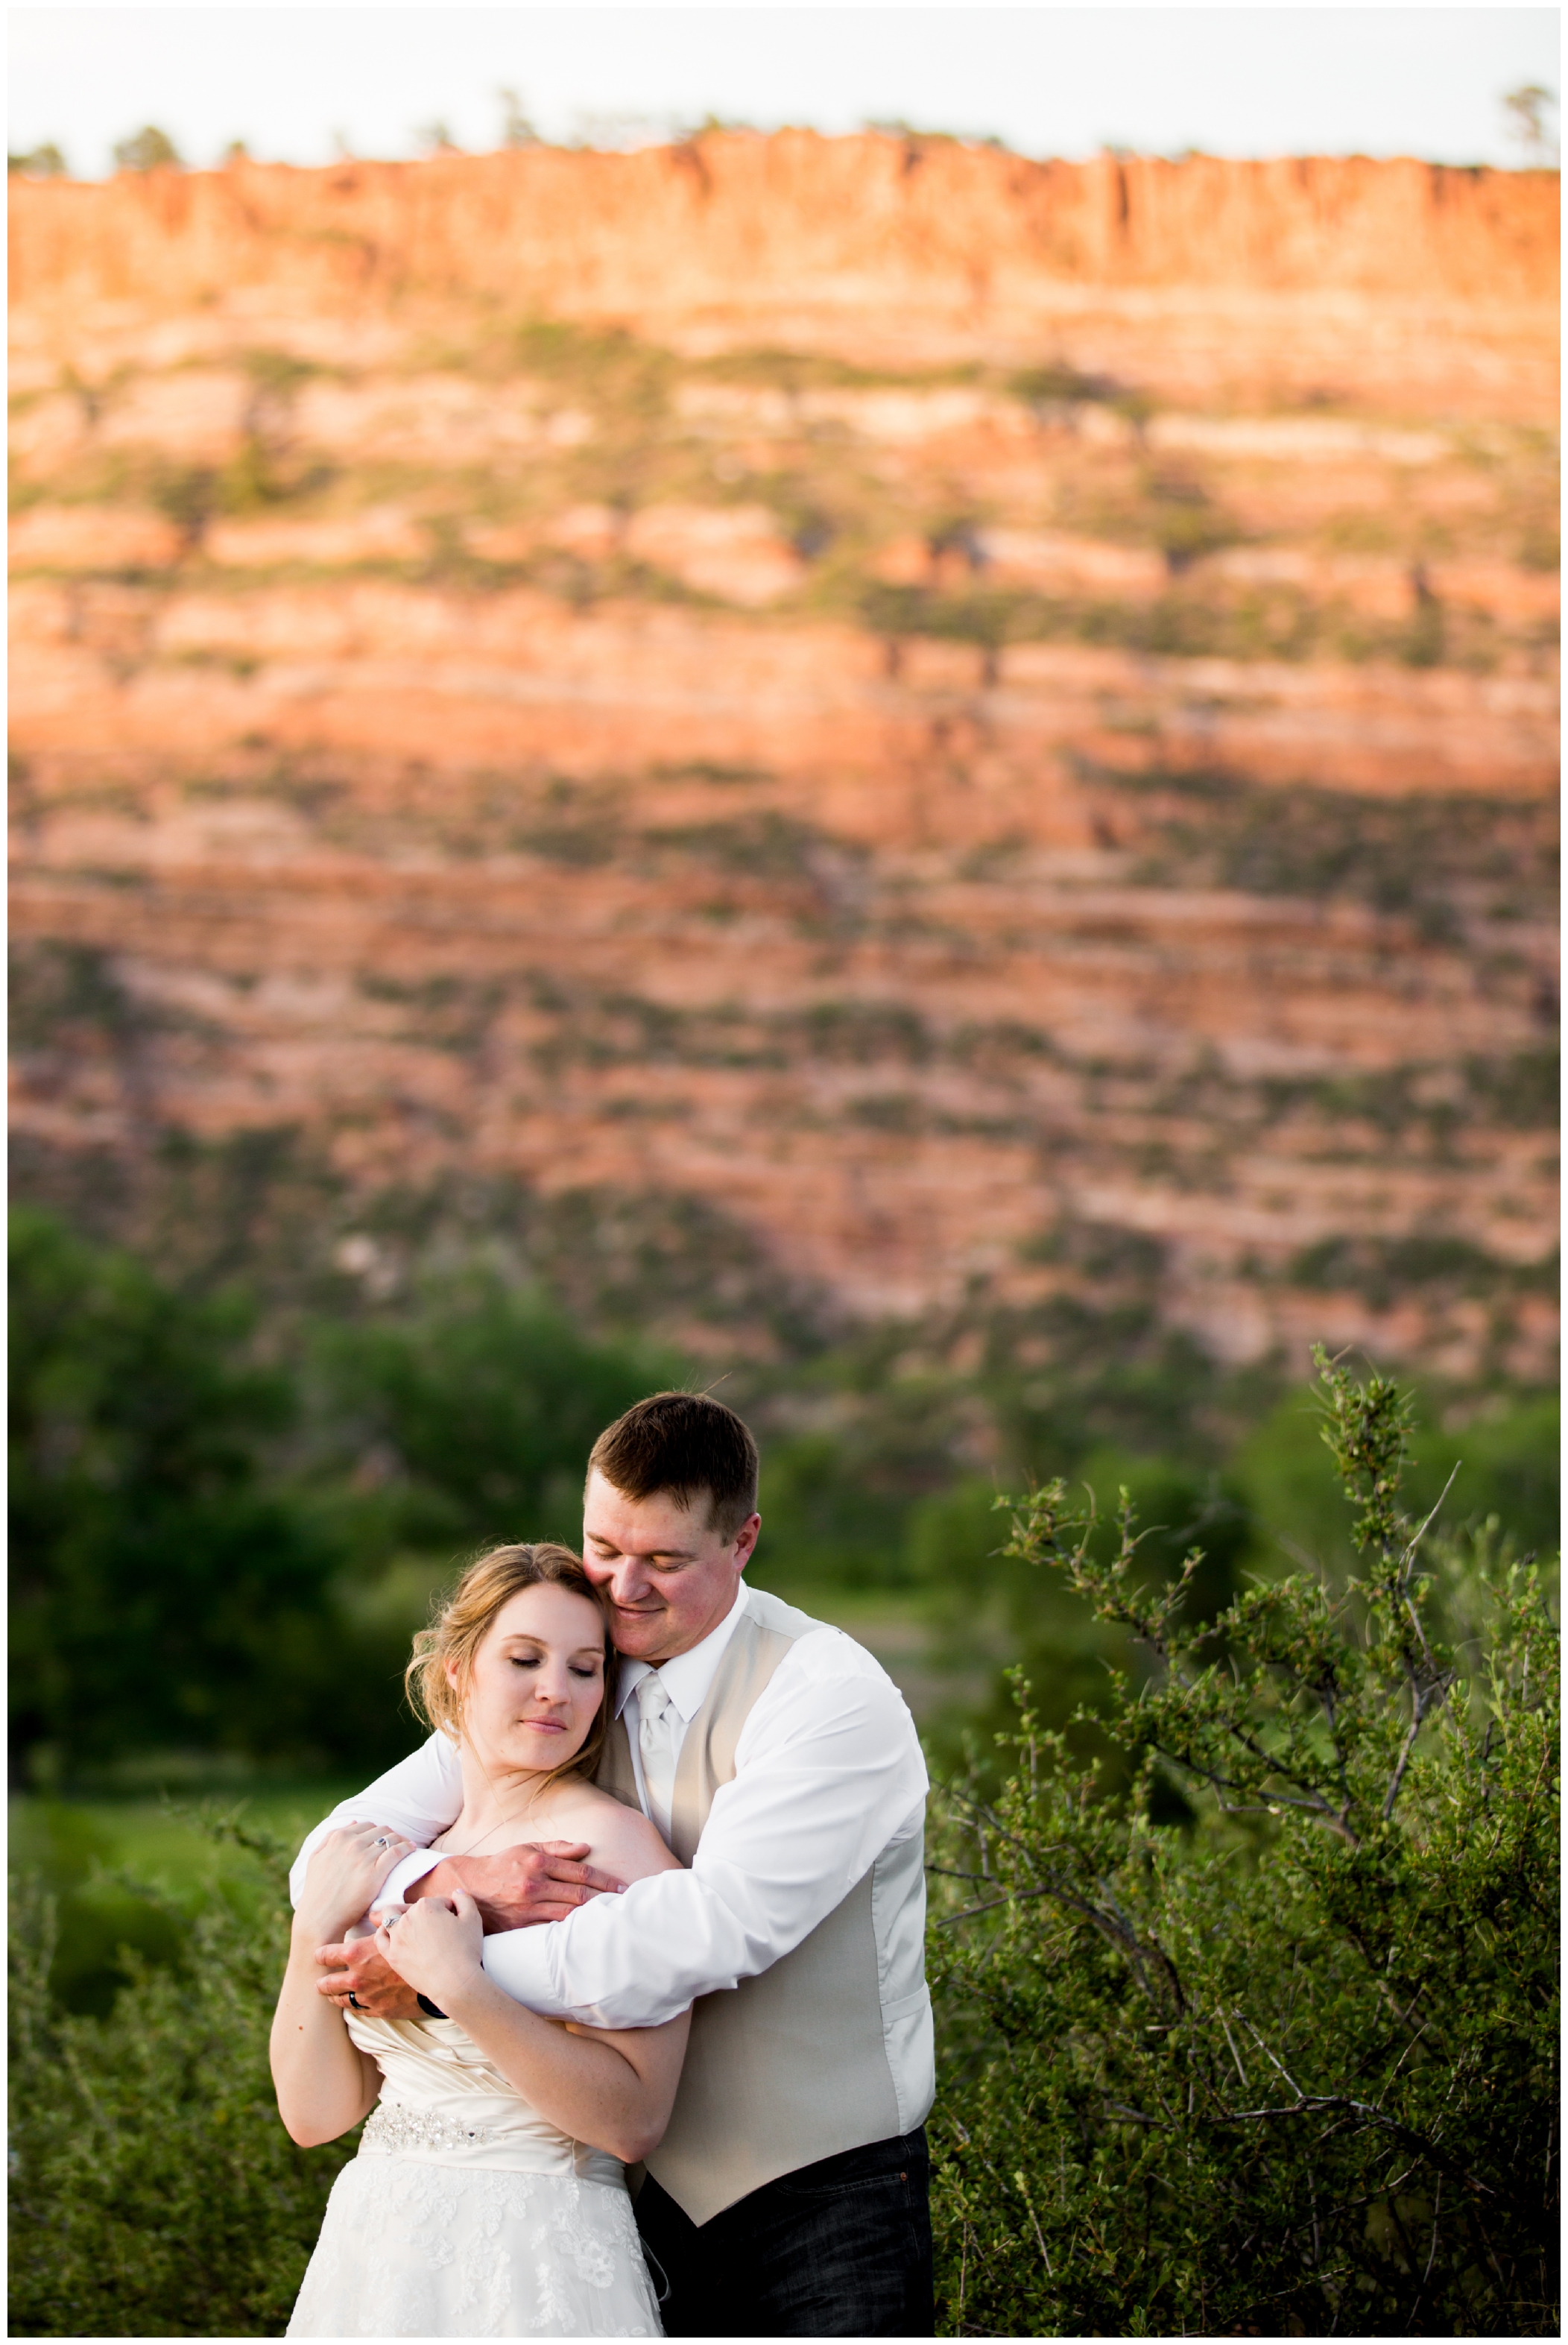 Loveland Colorado ranch wedding images 